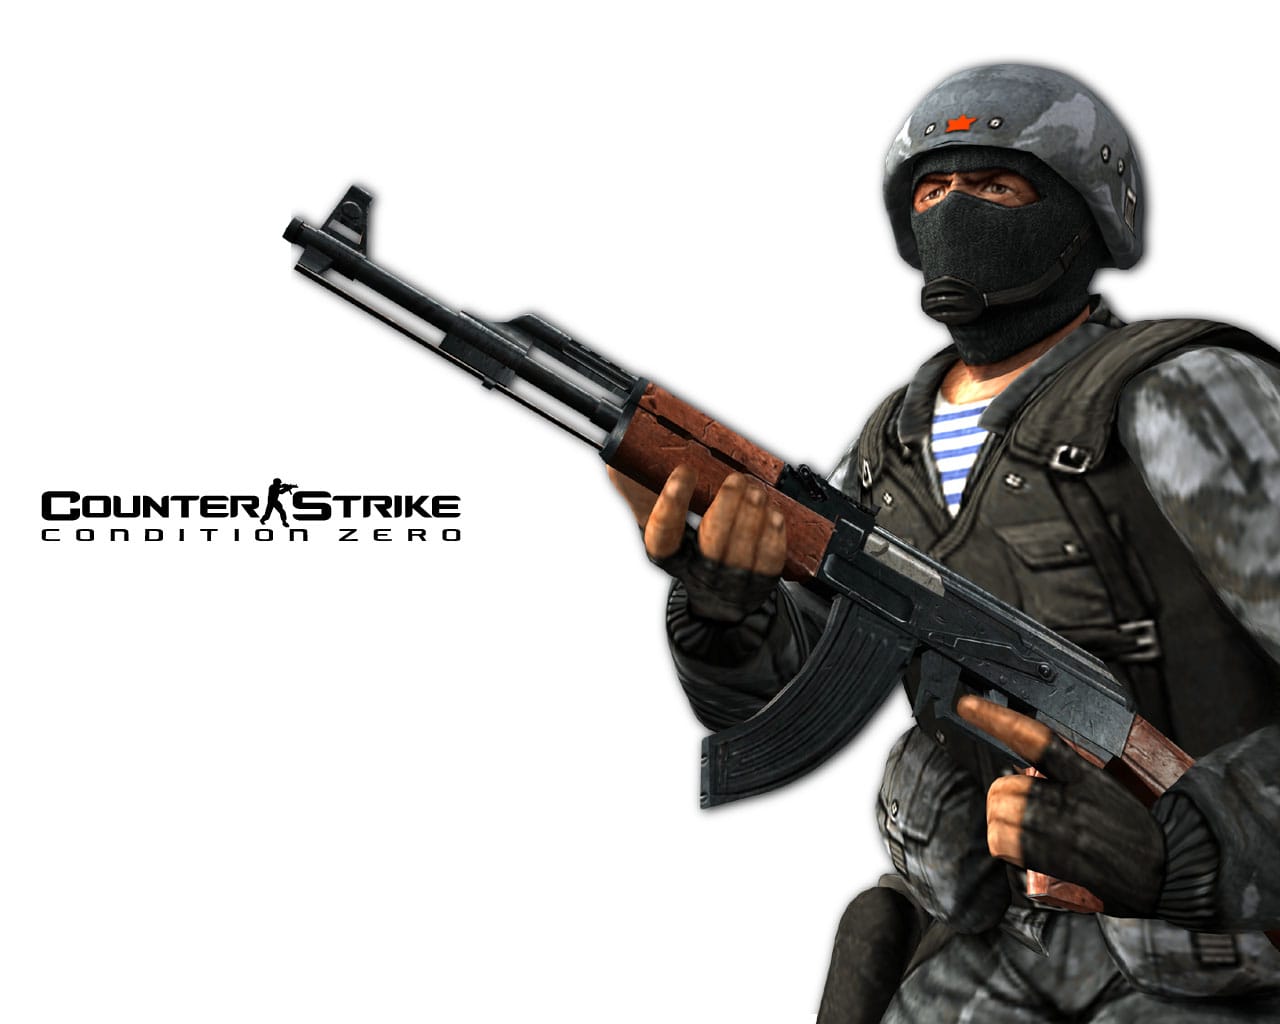 Counter-Strike: Condition Zero Box Shot for PC - GameFAQs